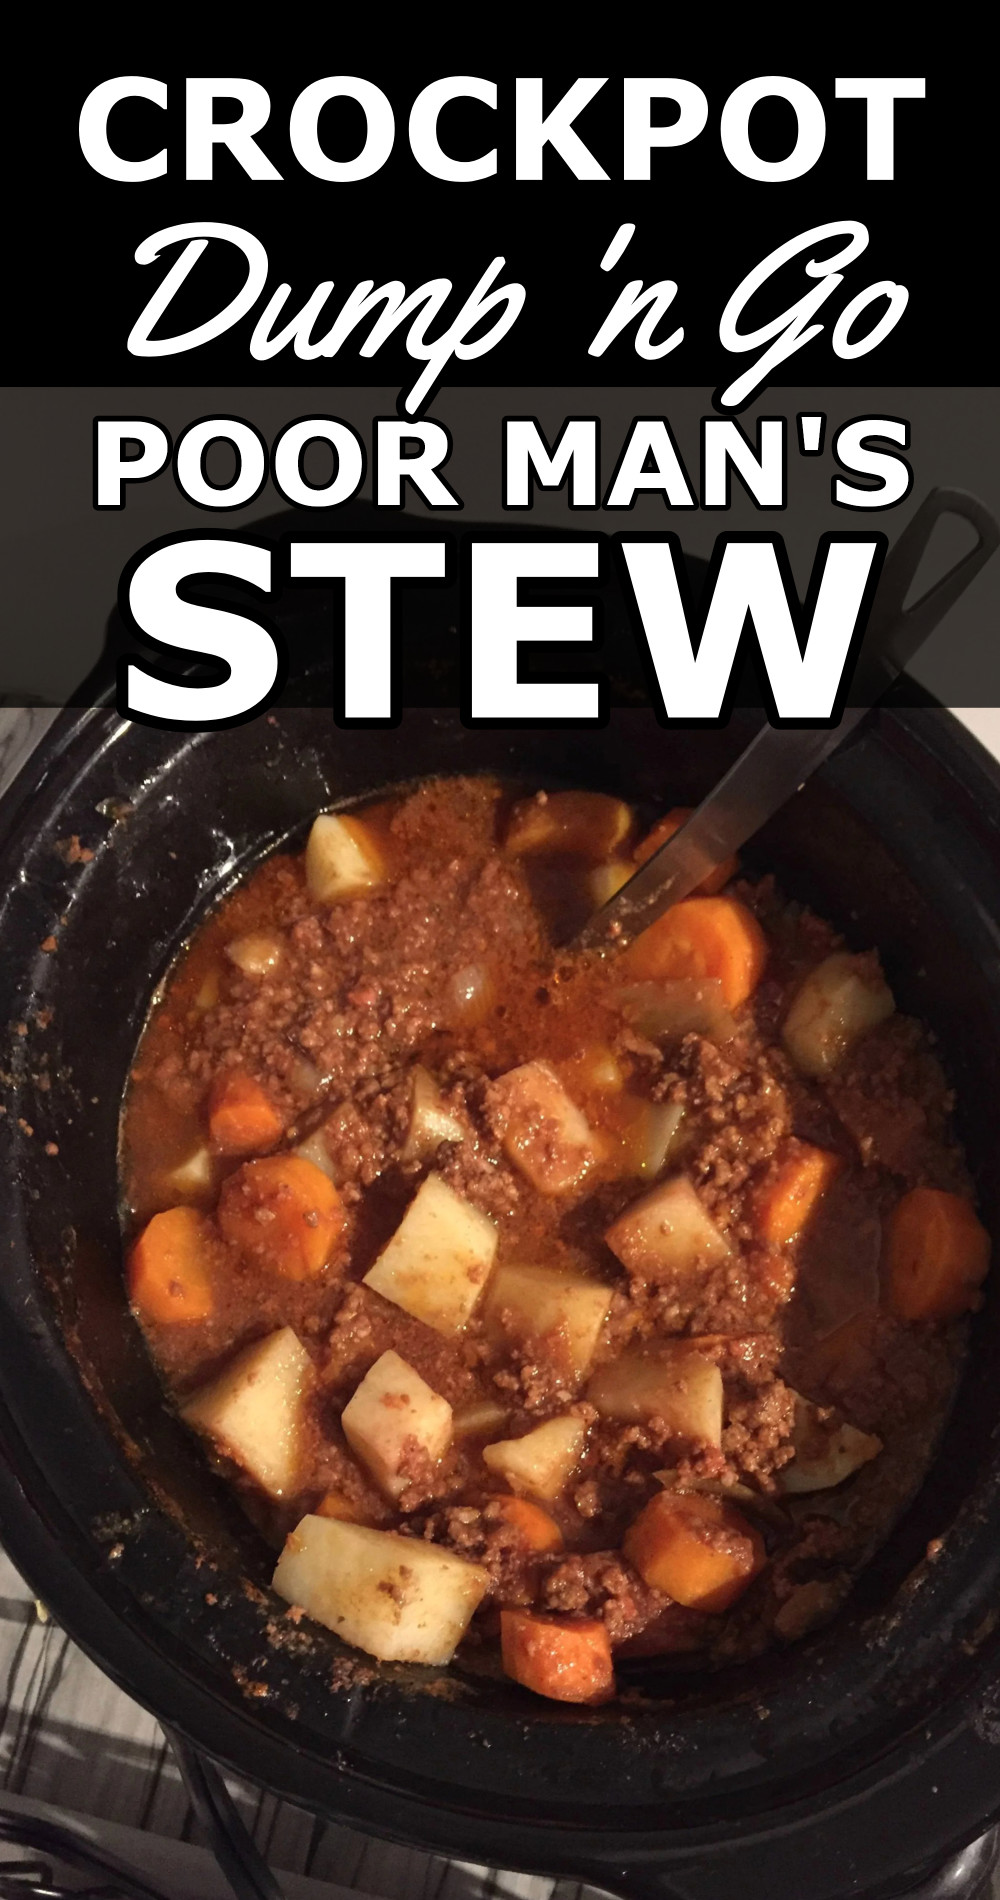 crockpot dump and go poor mans stew